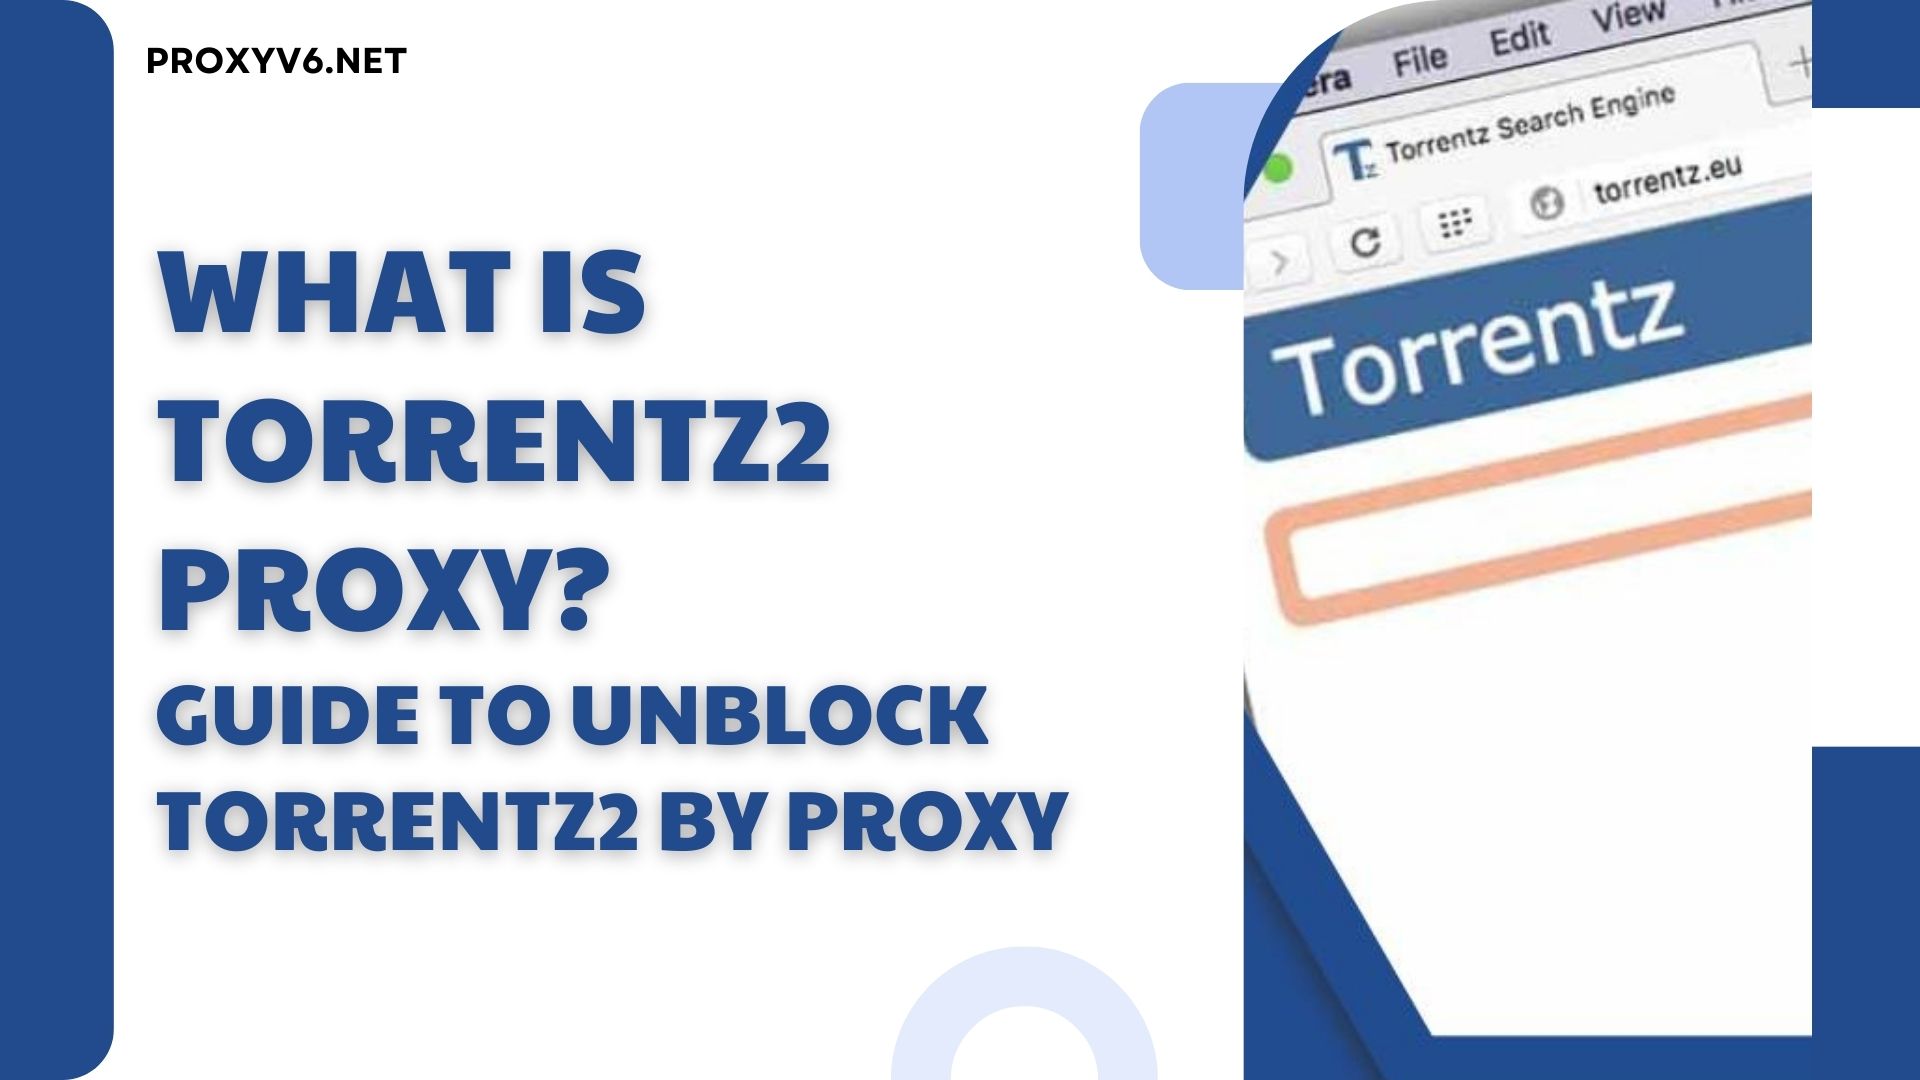 What is Torrentz2 Proxy? Guide to unblock Torrentz2 by Proxy